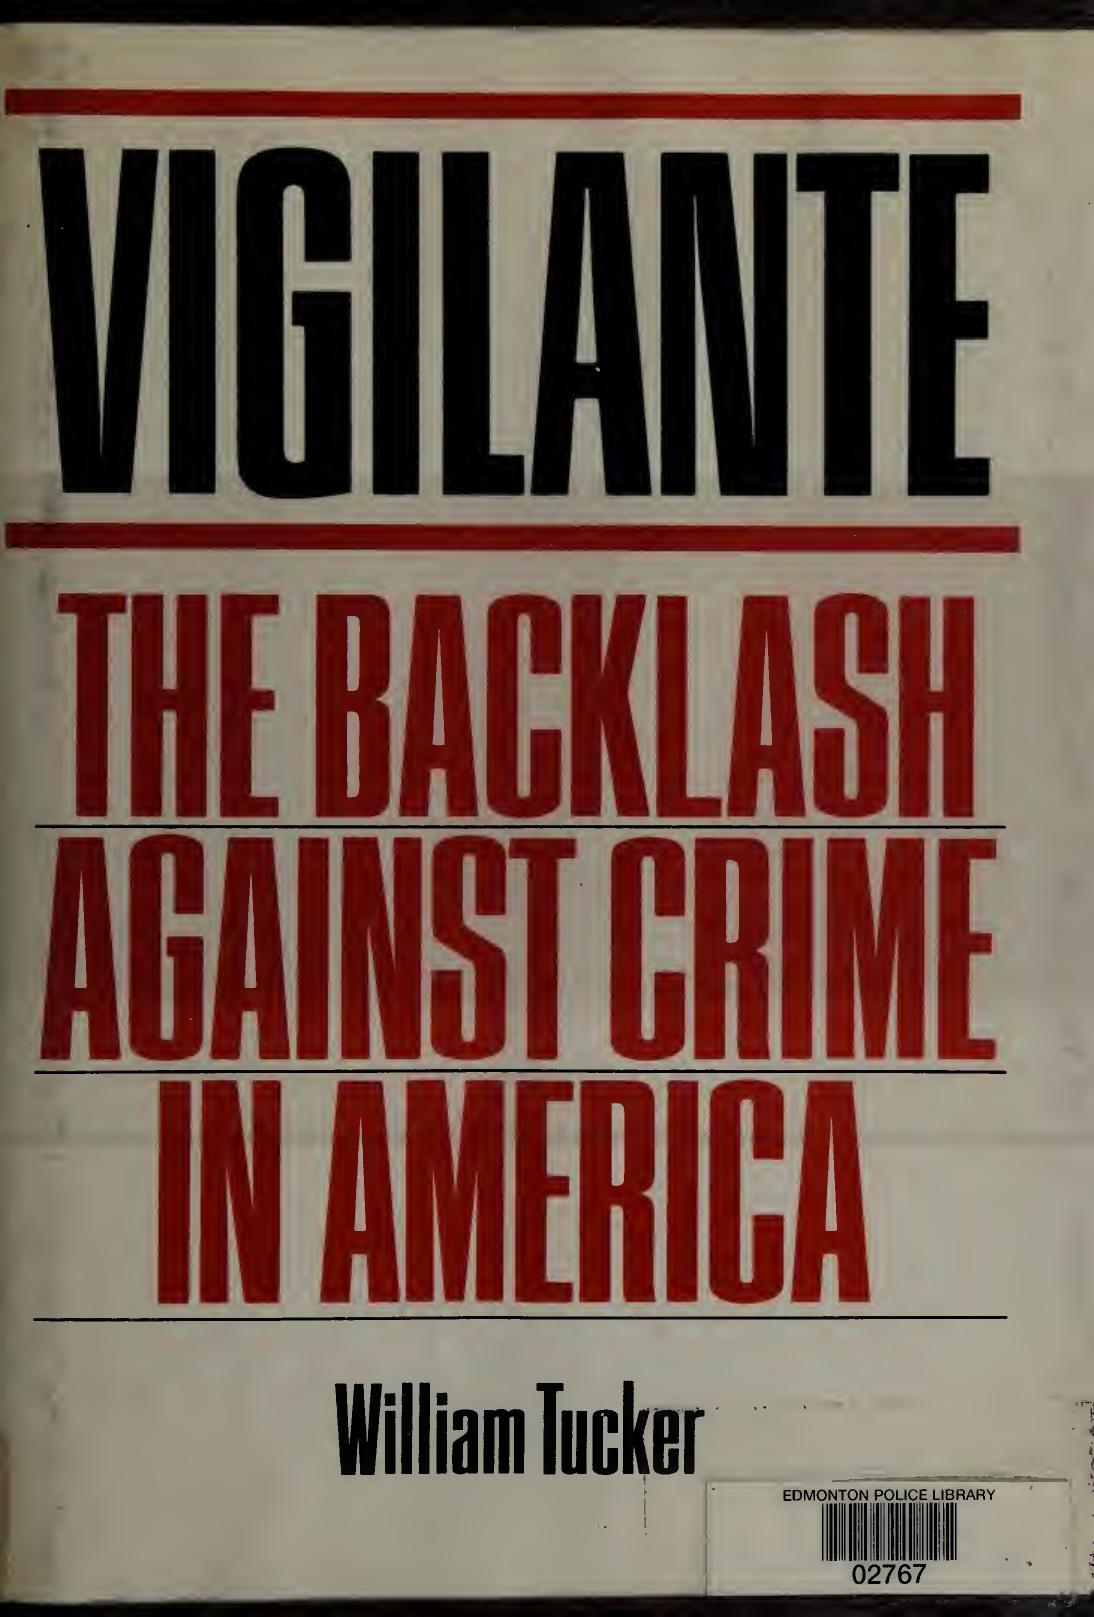 Vigilante, the Backlash Against Crime in America